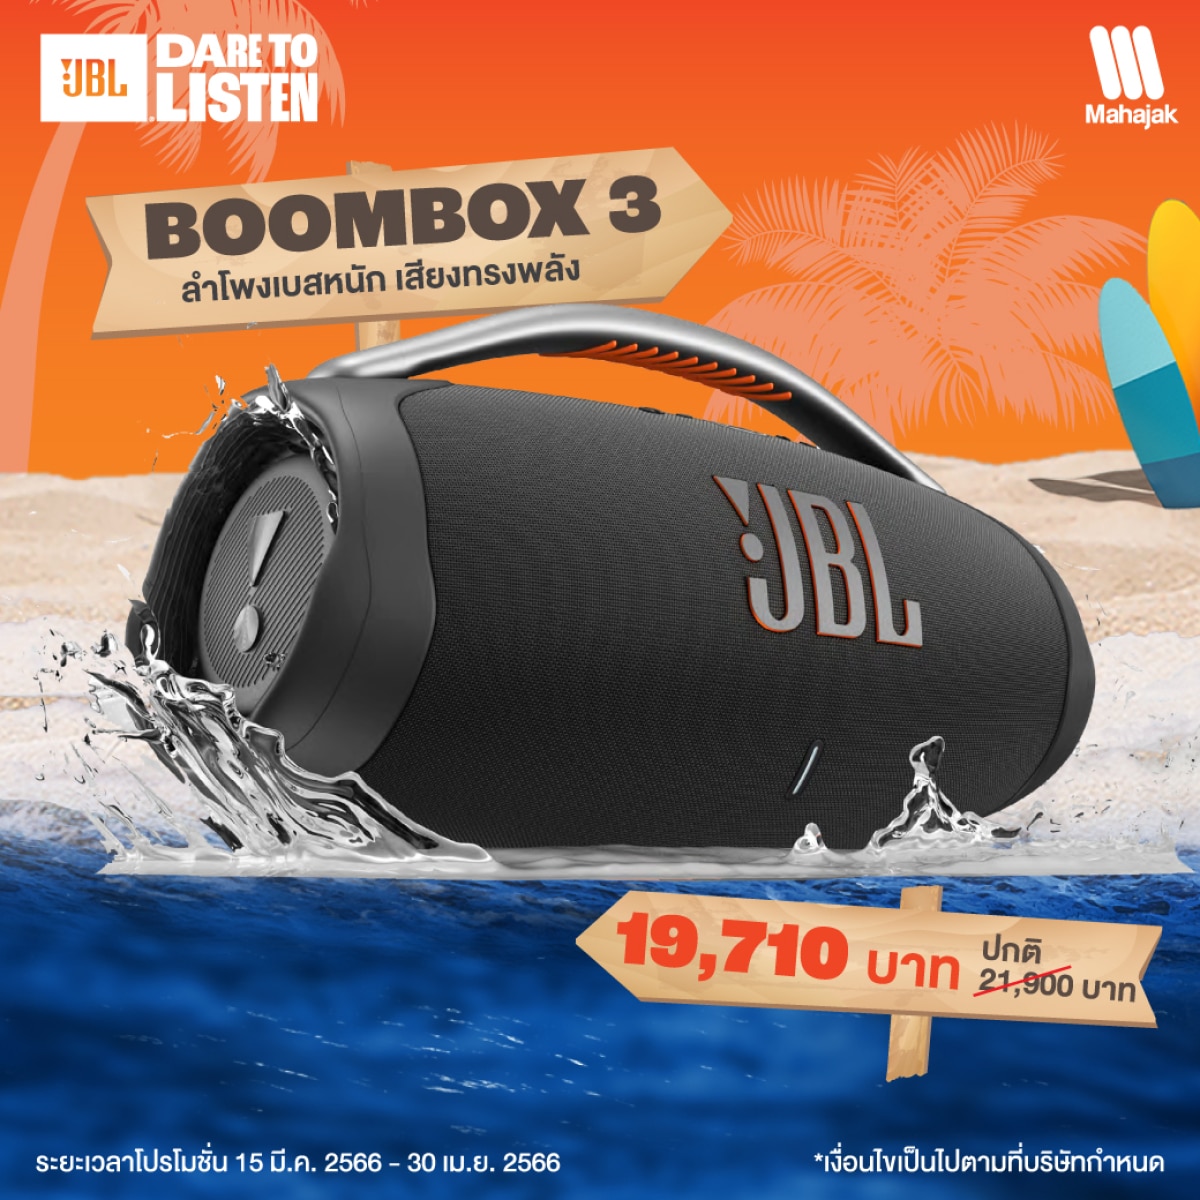 MAHAJAK JBL หูฟัง ลำโพง BOOMBOX 3